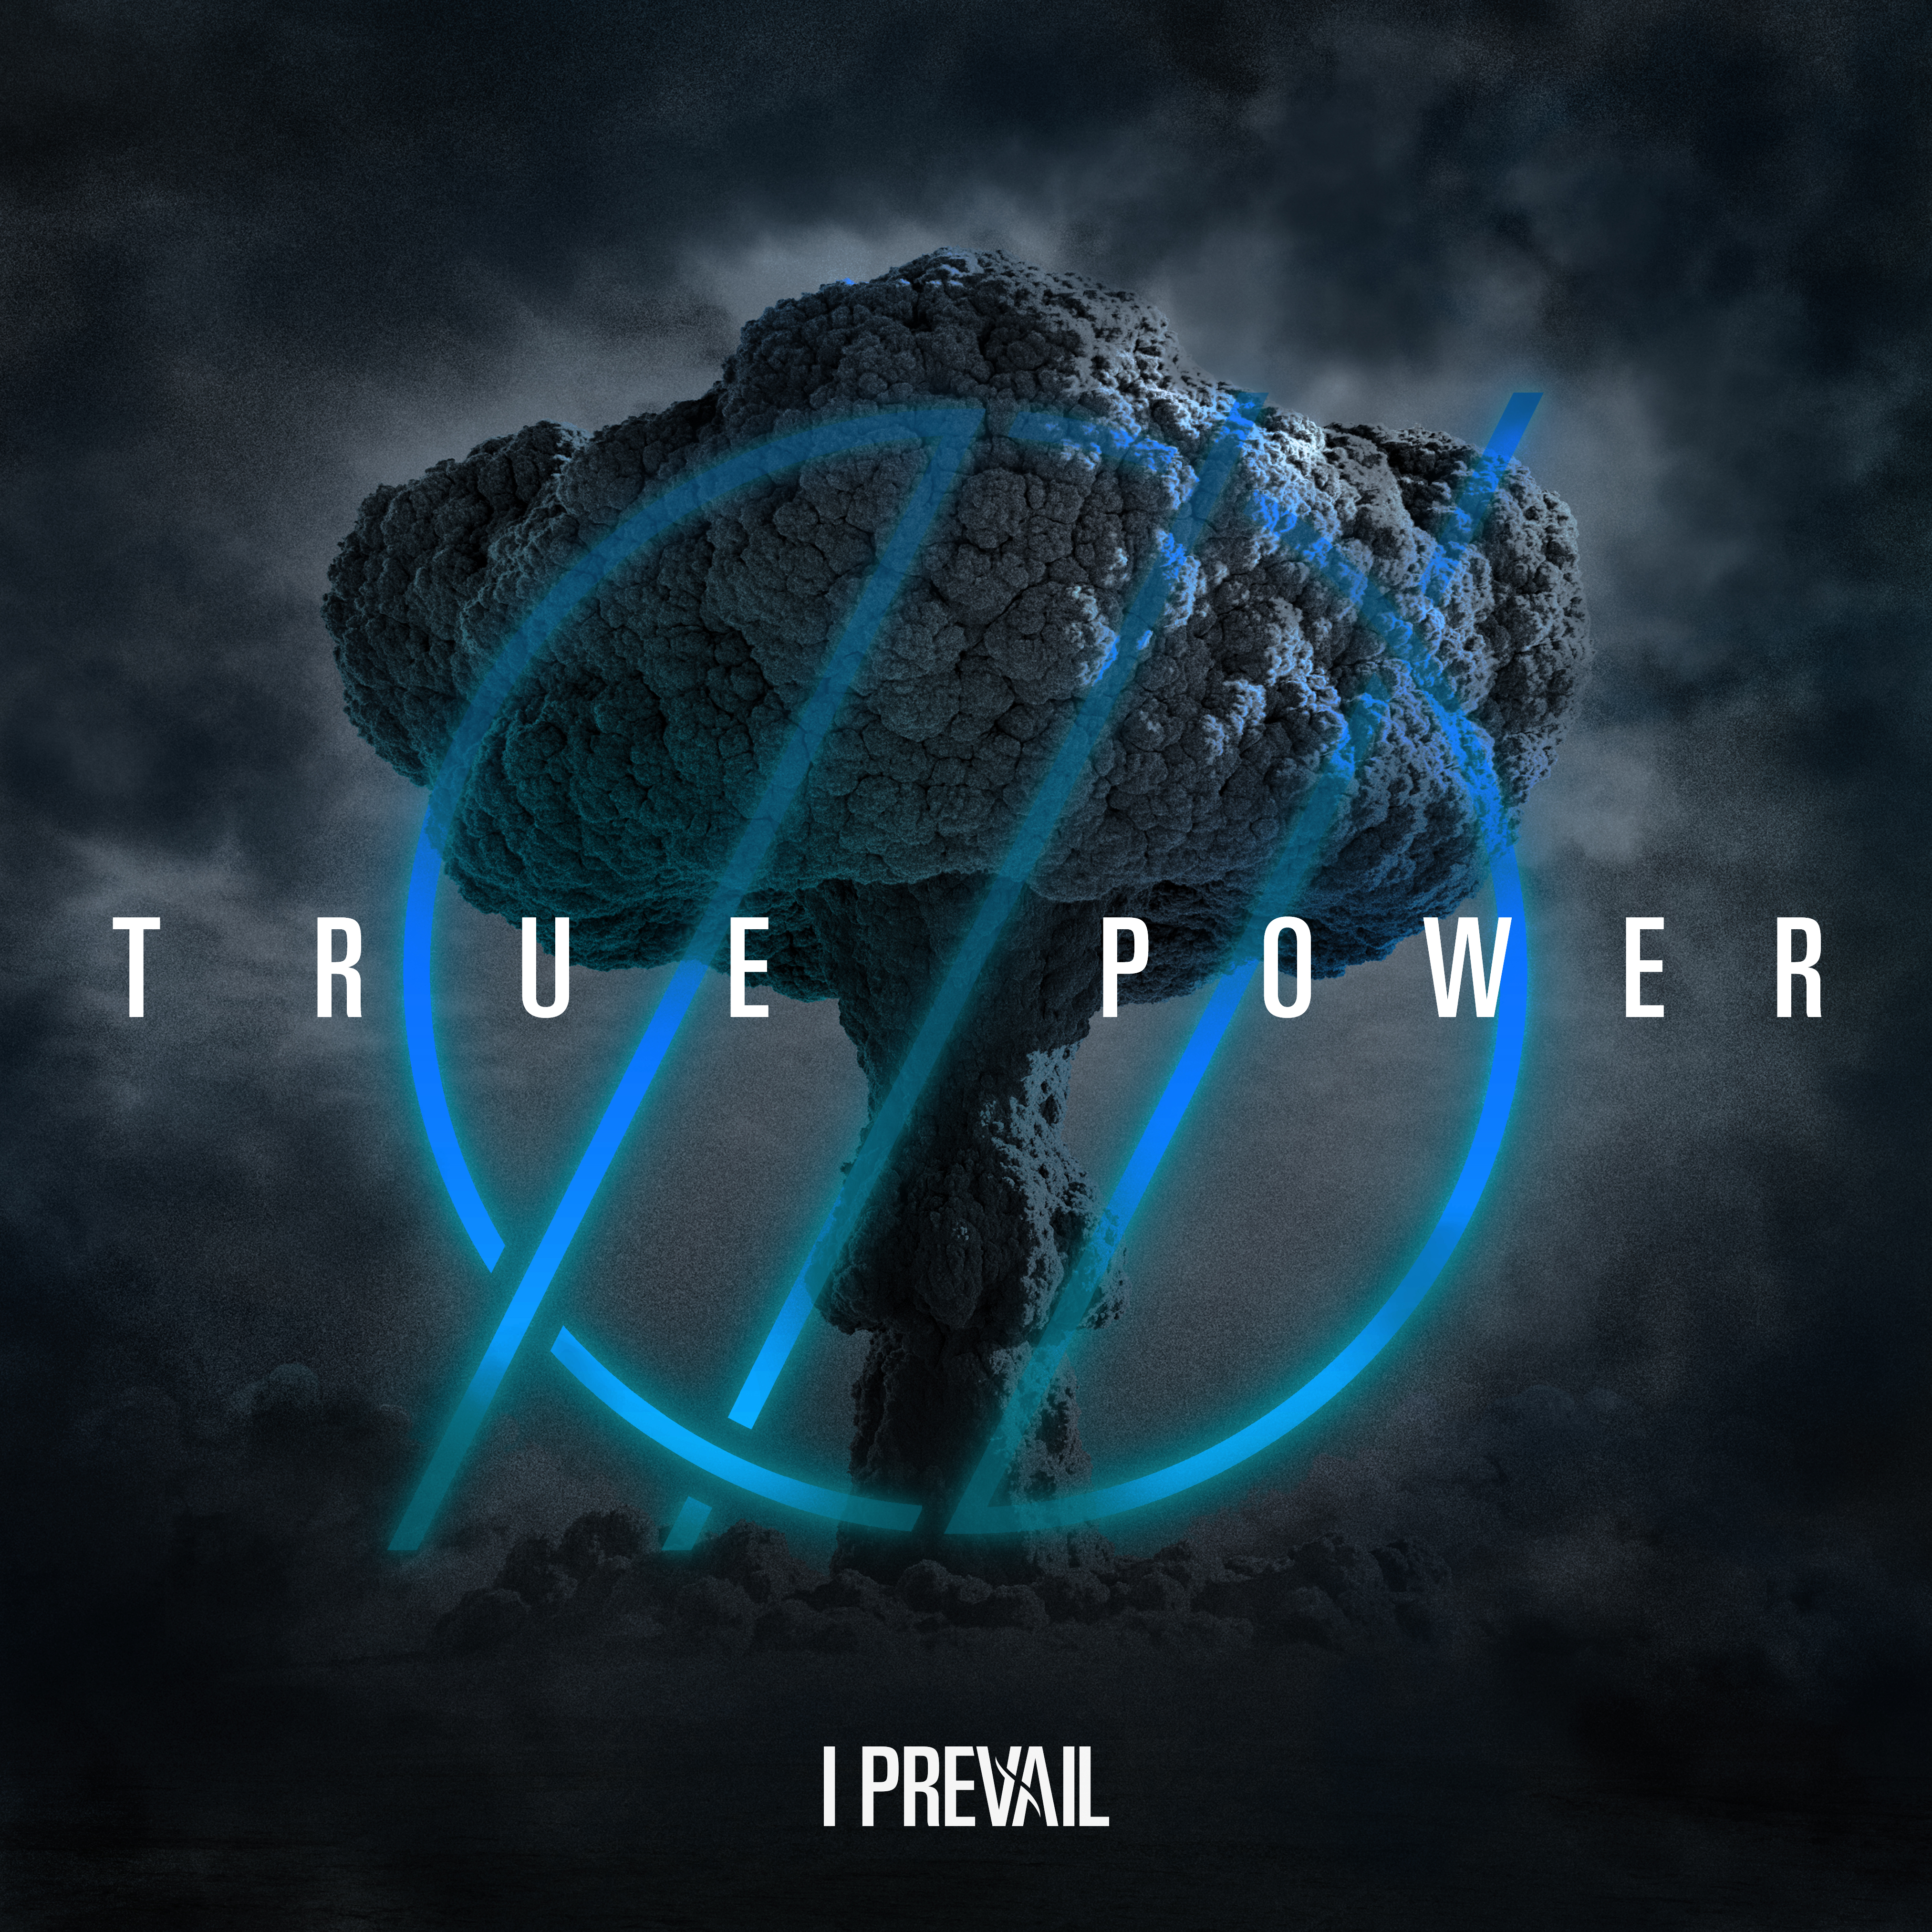 The album artwork for True Power by I Prevail